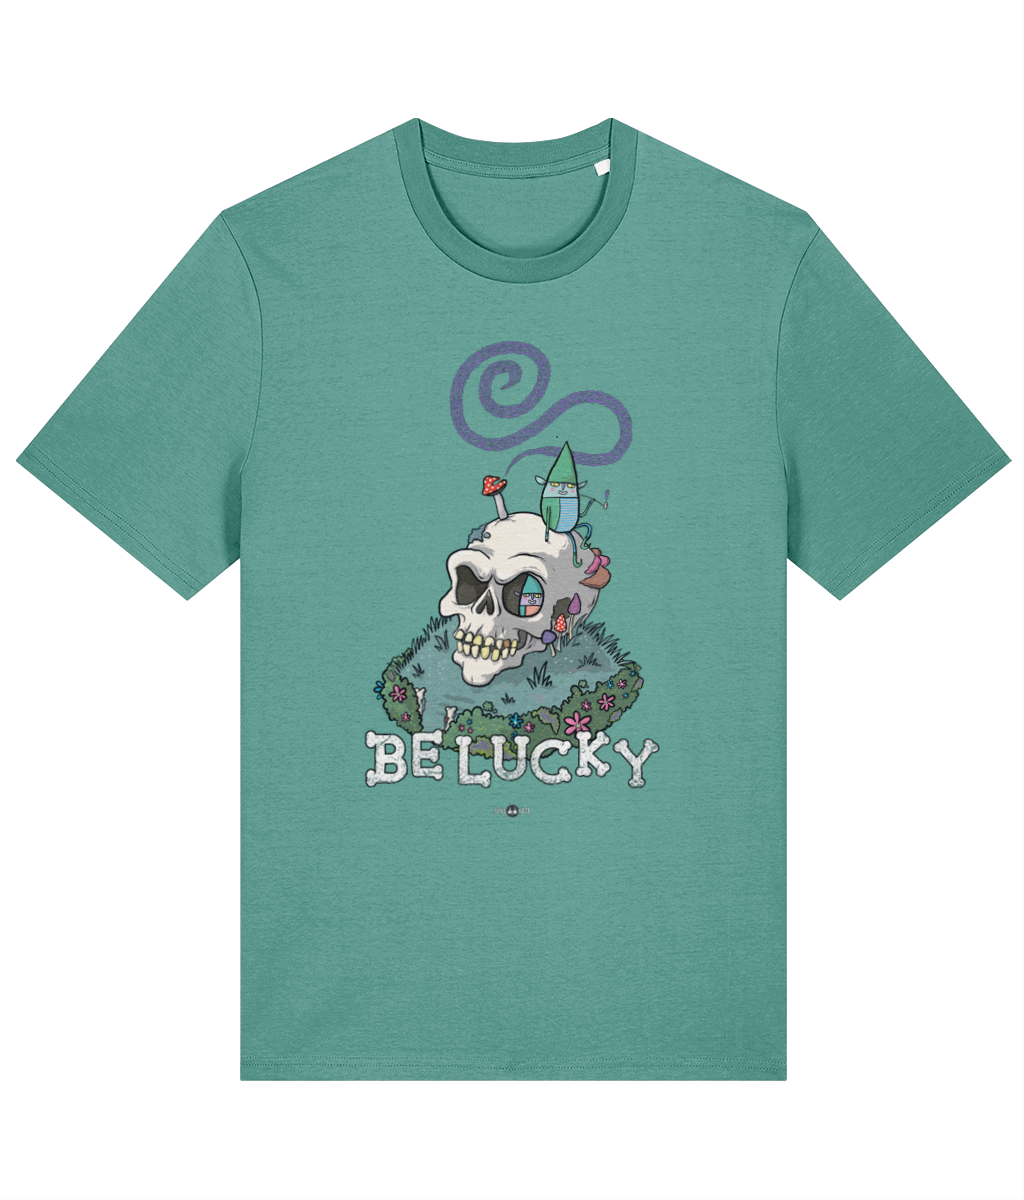 BE LUCKY - Cornish Piskie T-shirt